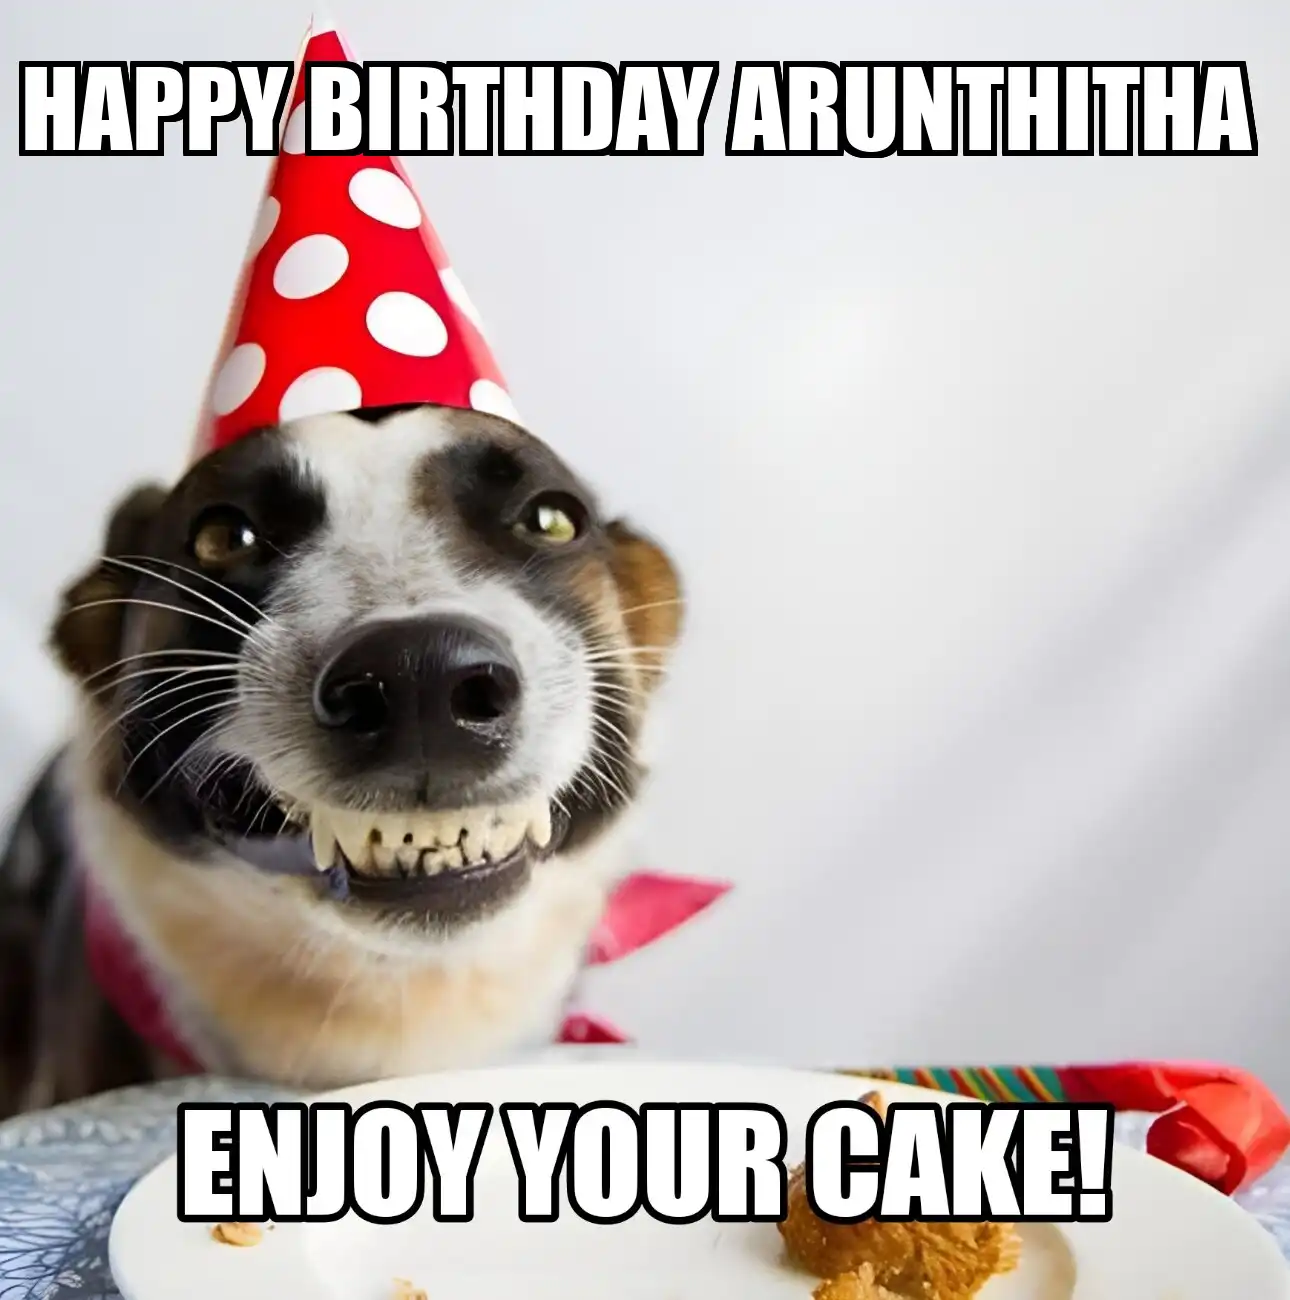 Happy Birthday Arunthitha Enjoy Your Cake Dog Meme